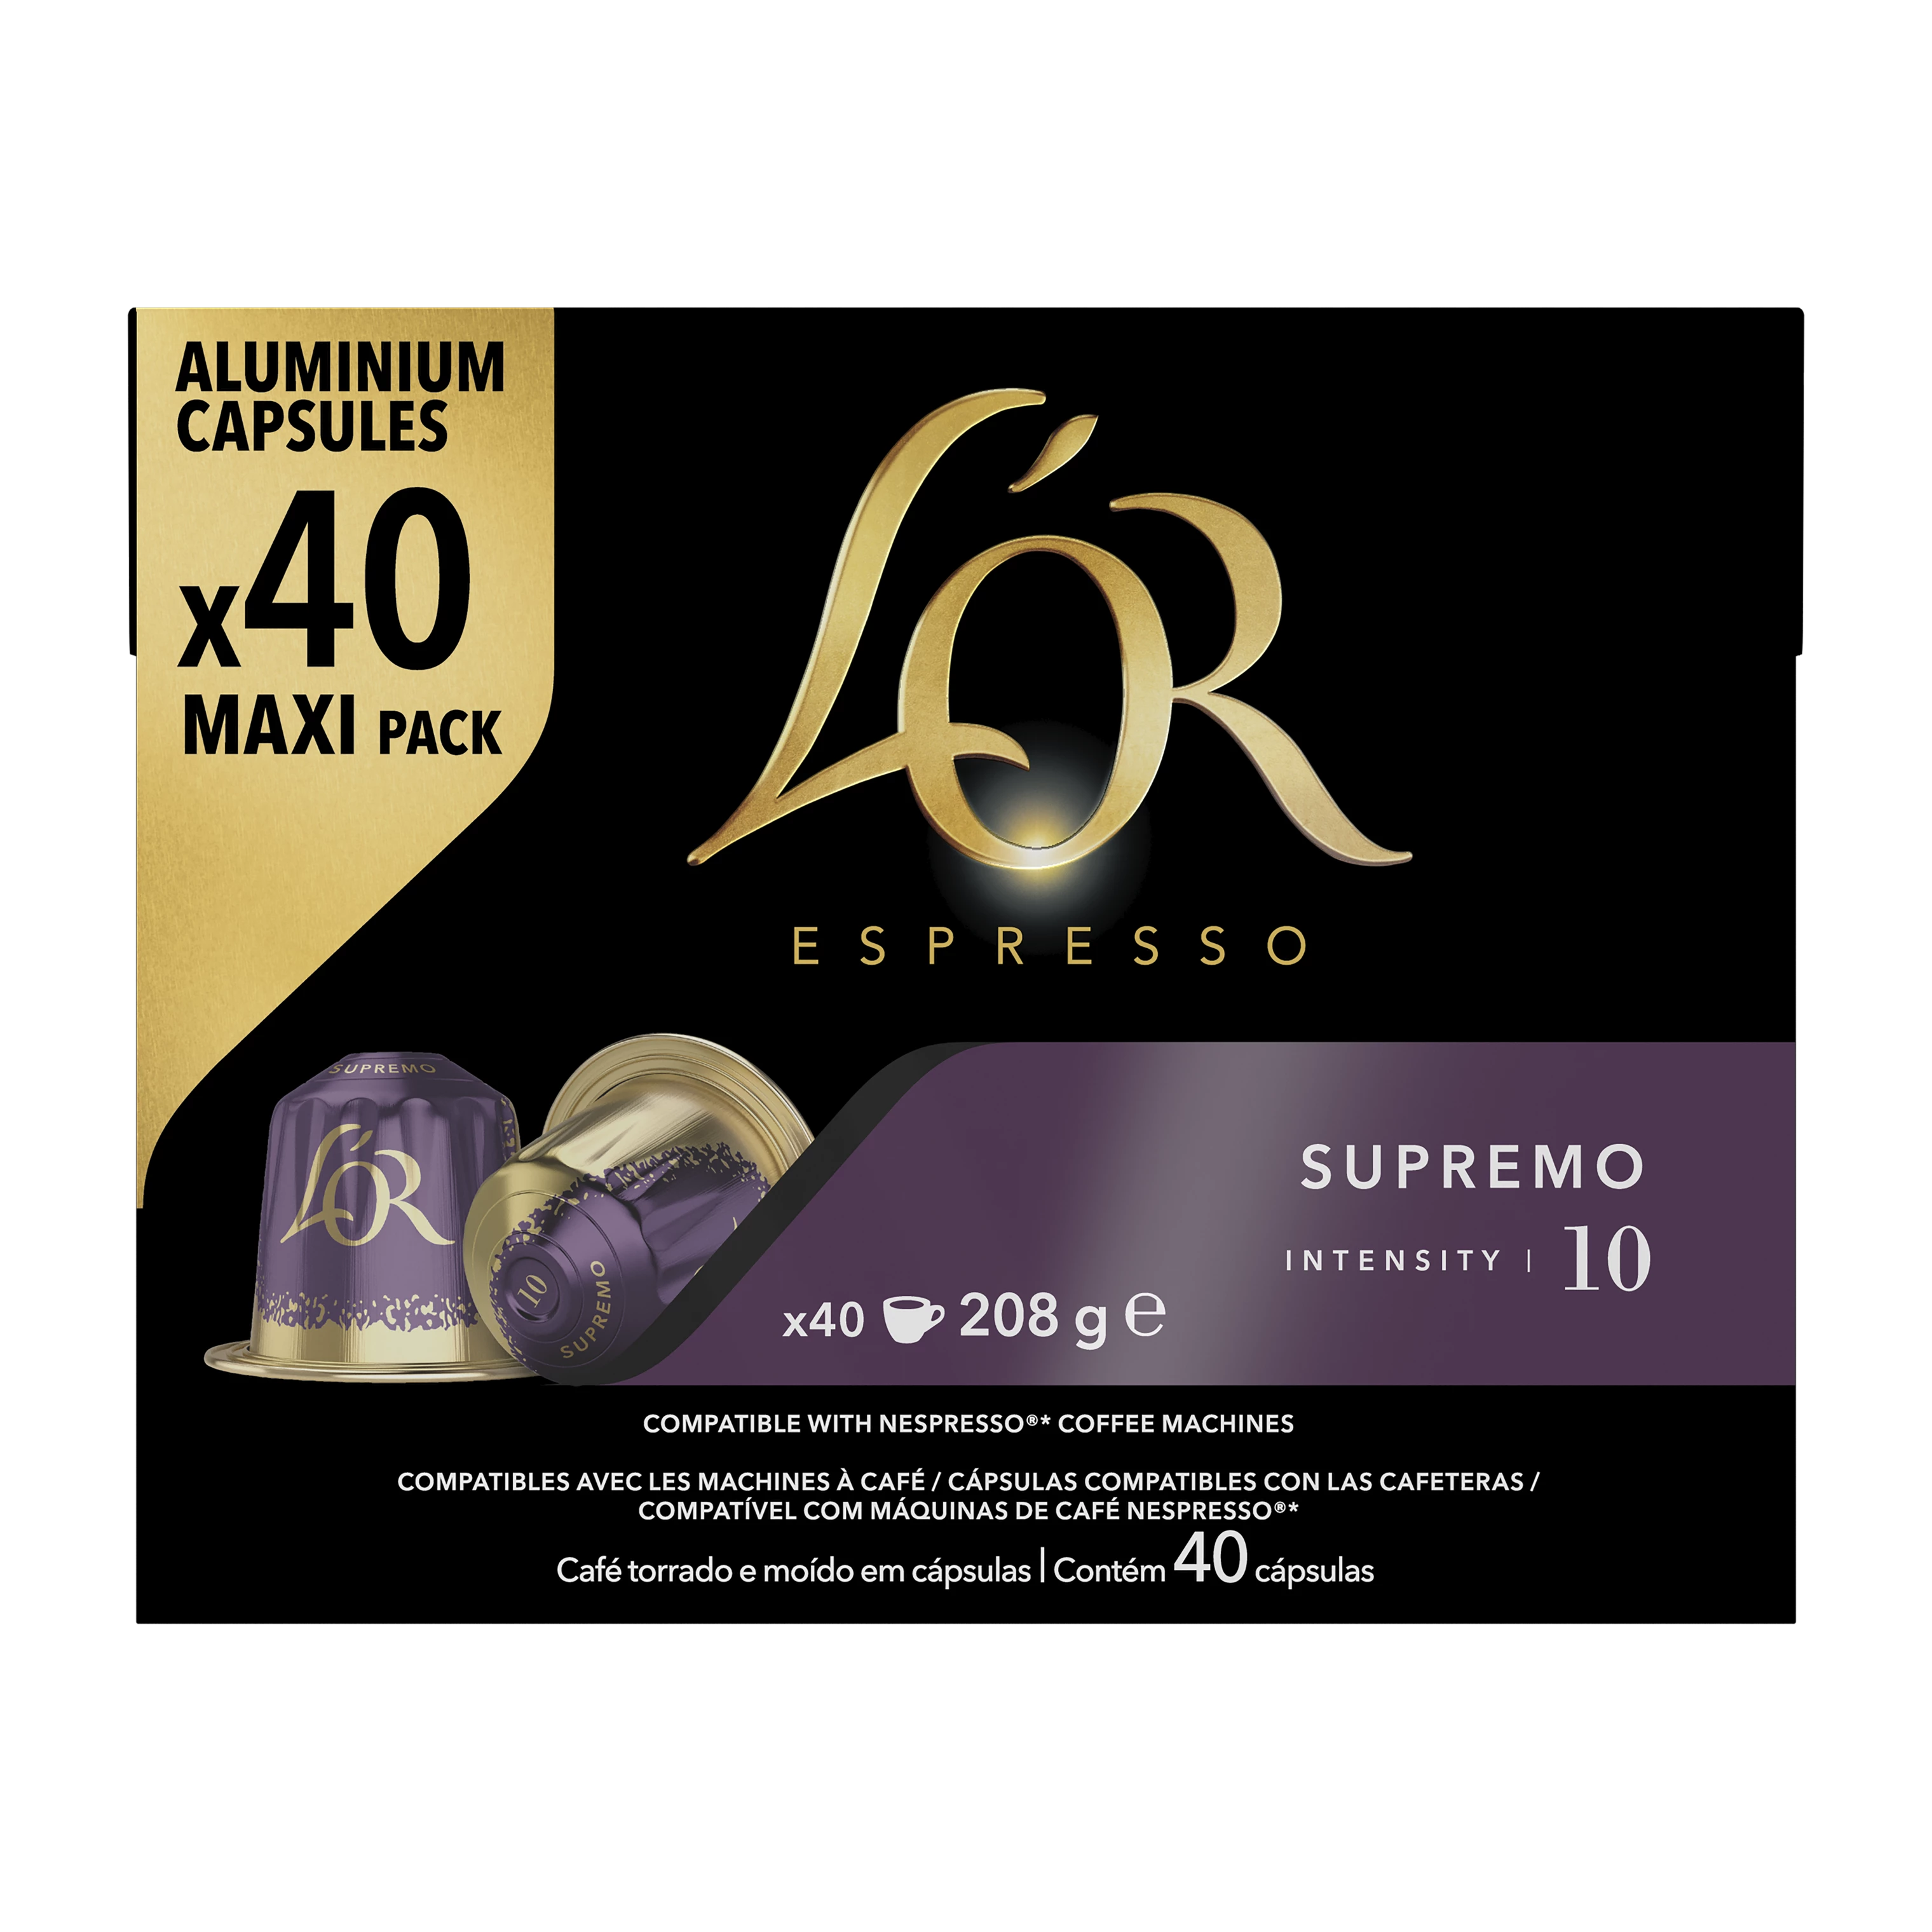 Кофейные капсулы Supremo Espresso, совместимые с Nespresso; х40; 208г - Л'ОР